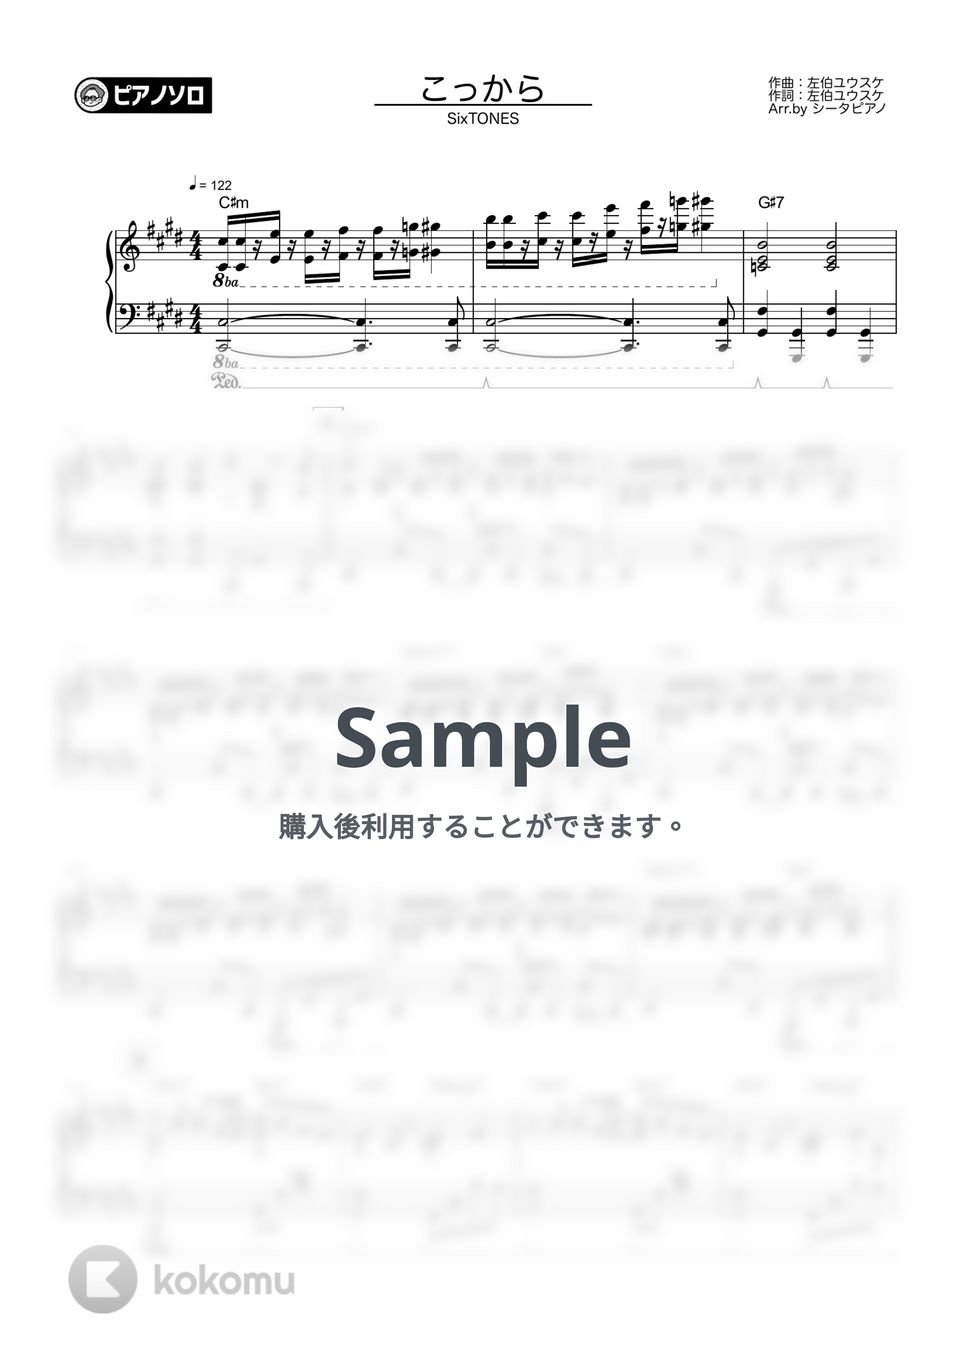 SixTONES - こっから by シータピアノ